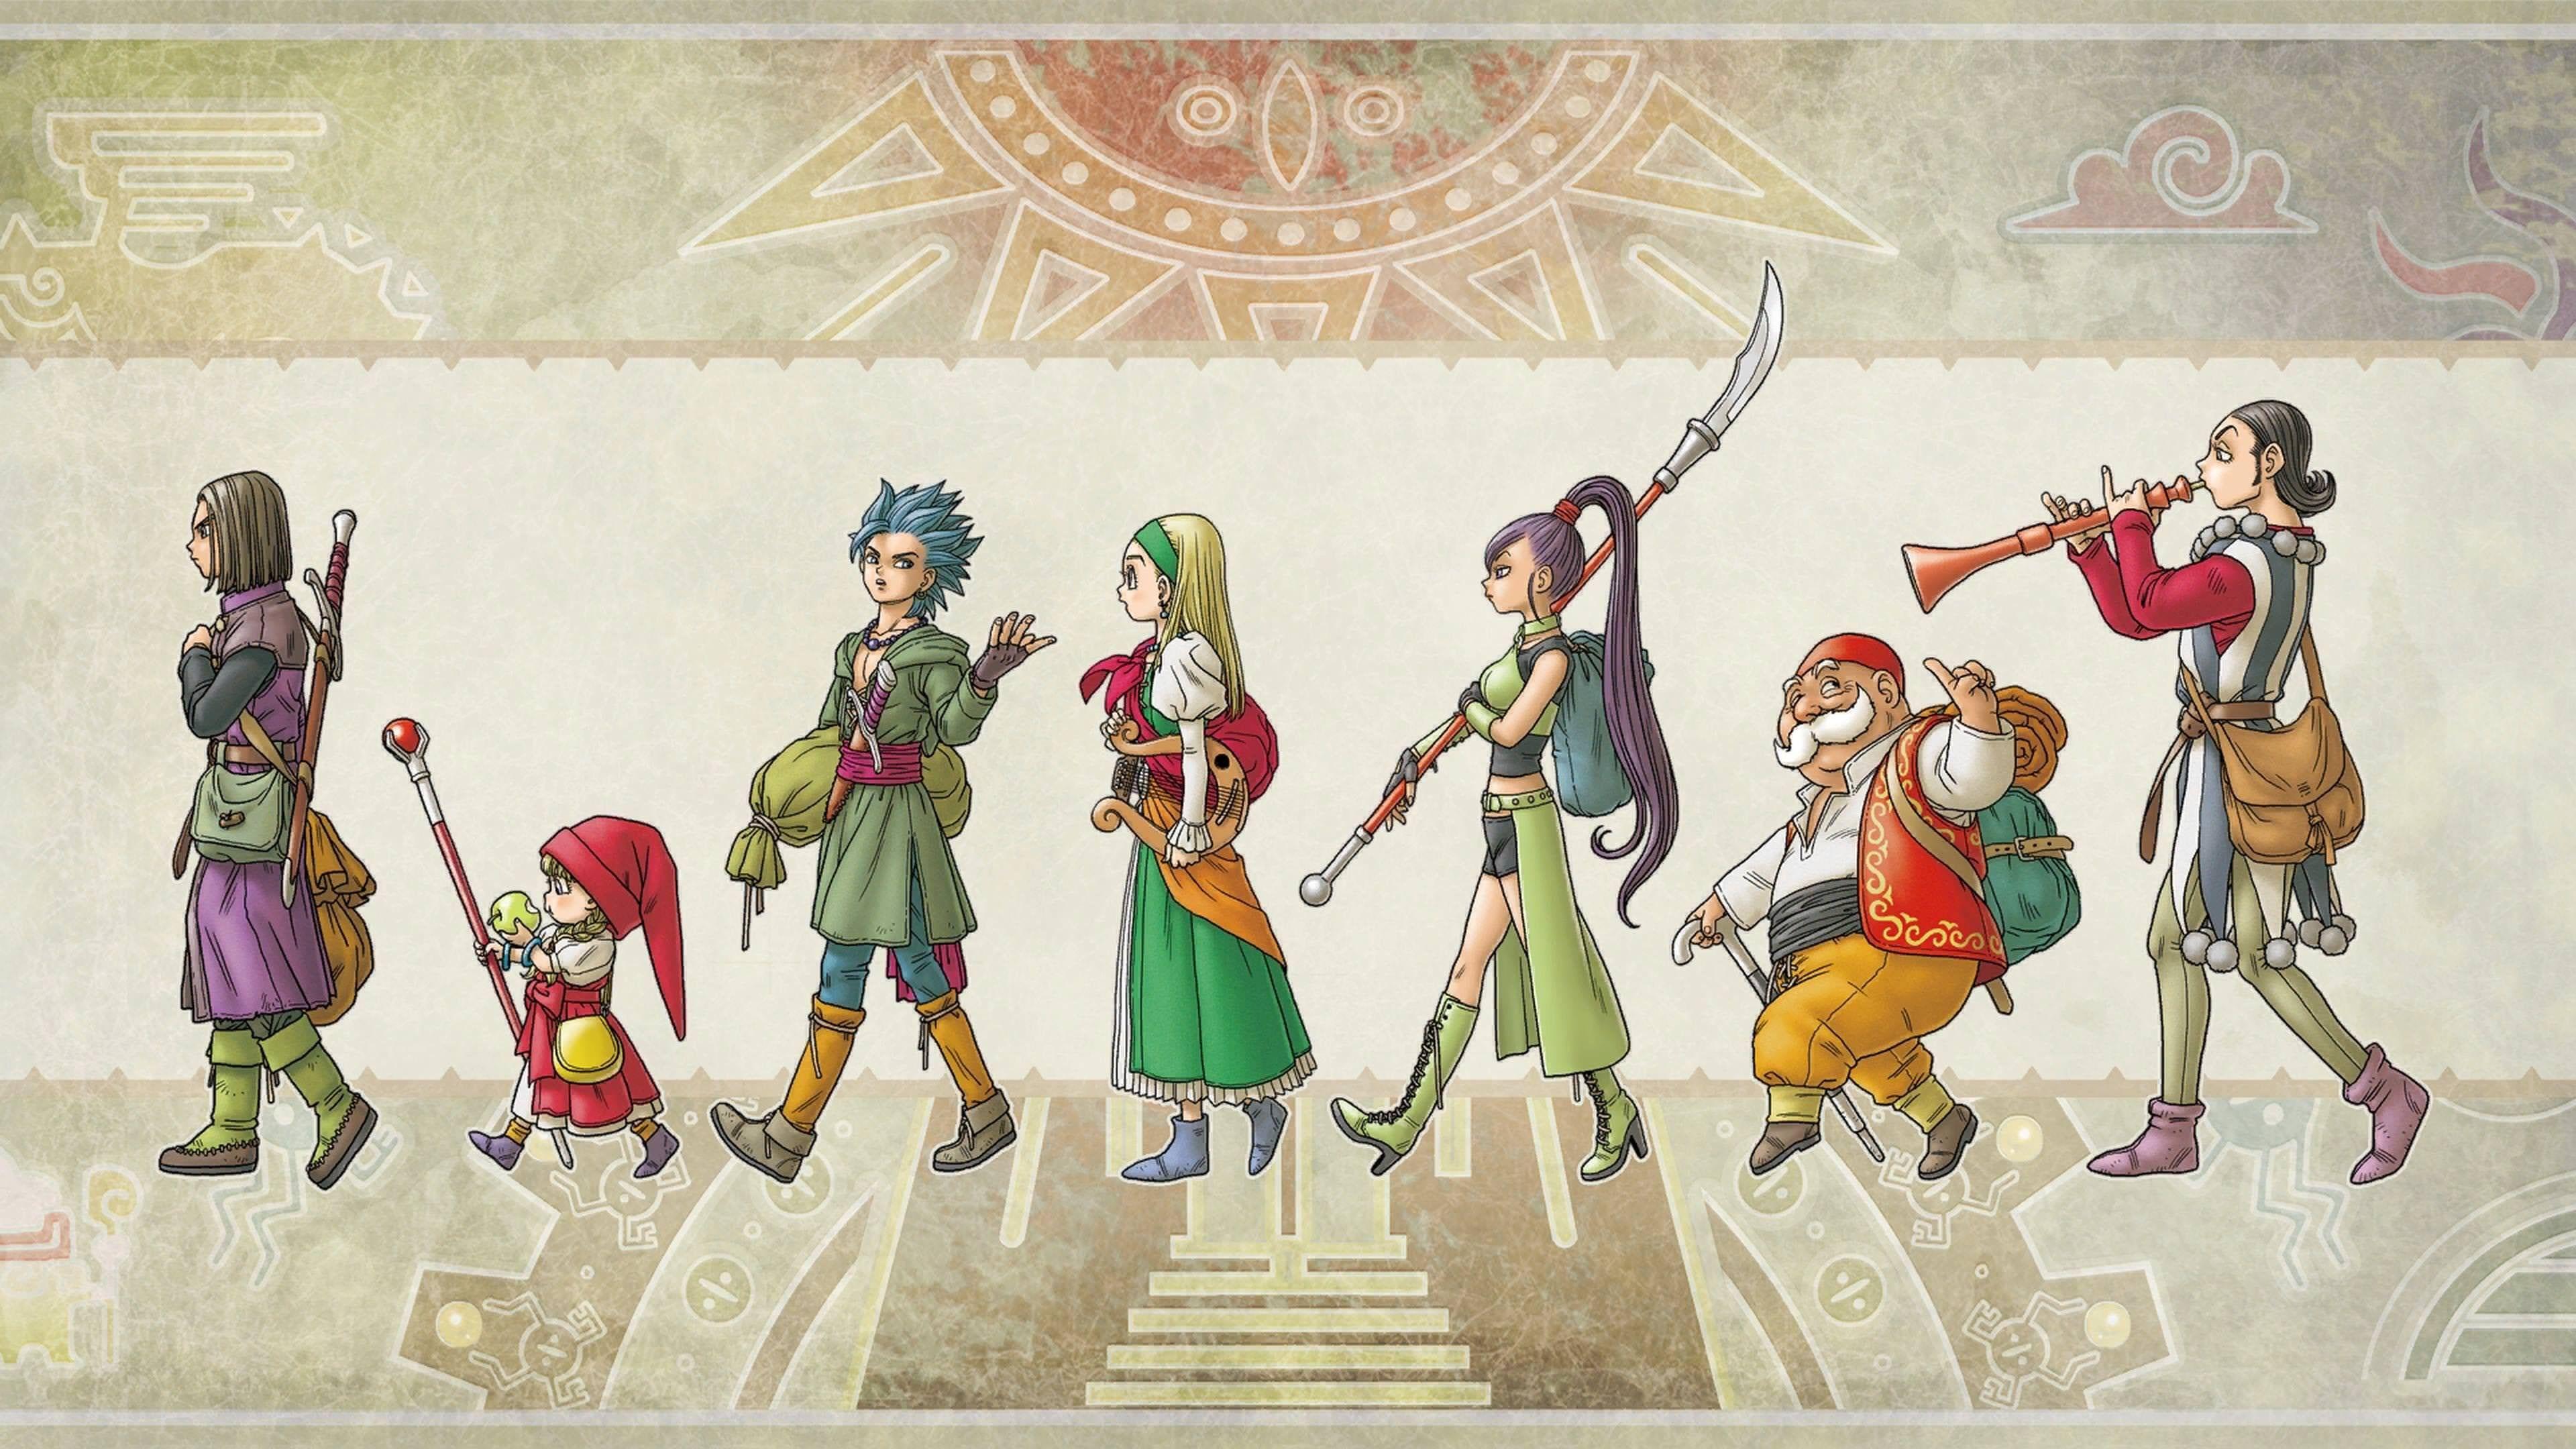 Dragon Quest Xi Wallpapers Top Free Dragon Quest Xi Backgrounds Wallpaperaccess